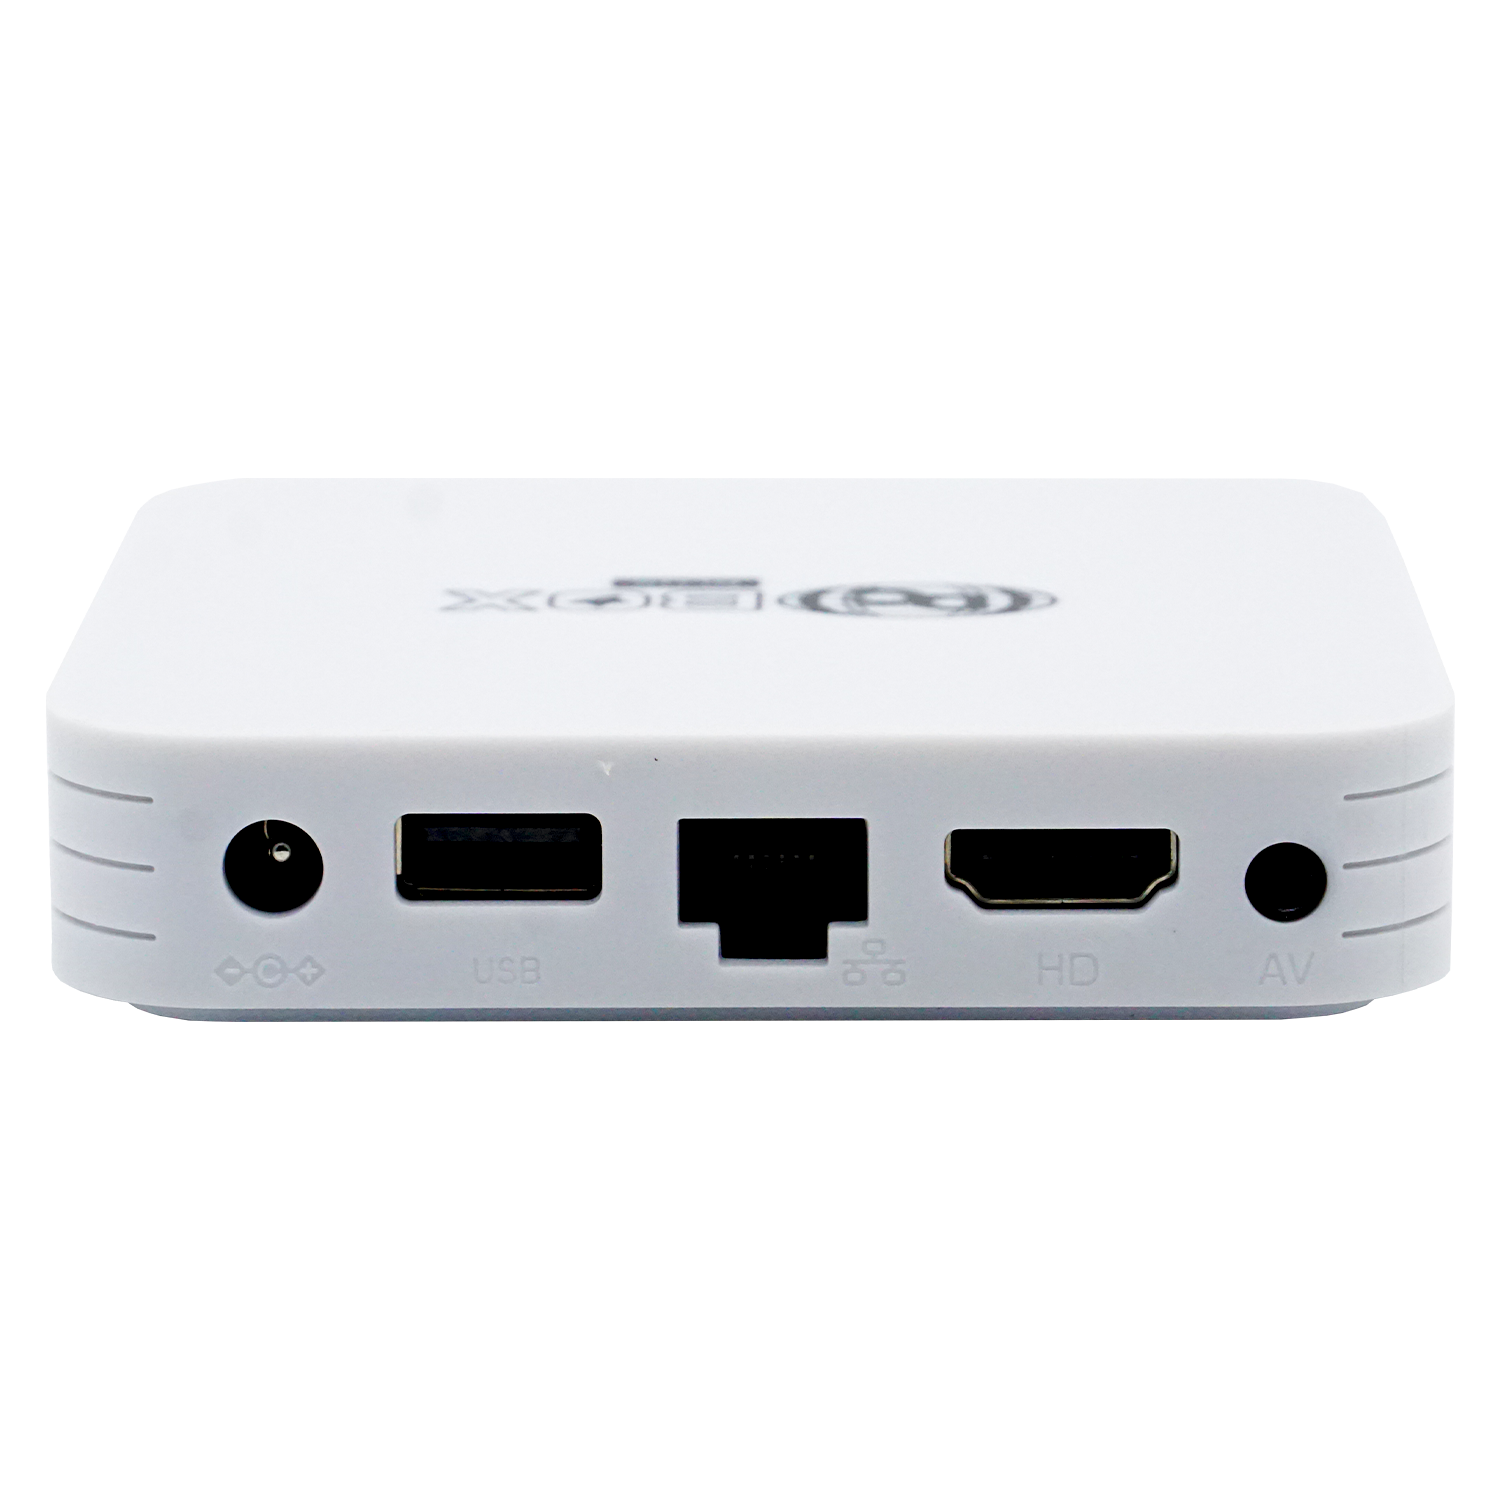 Receptor TV Box DC Box Plus 5G 8K Ultra HD 256GB 32GB RAM Wi-Fi - Branco